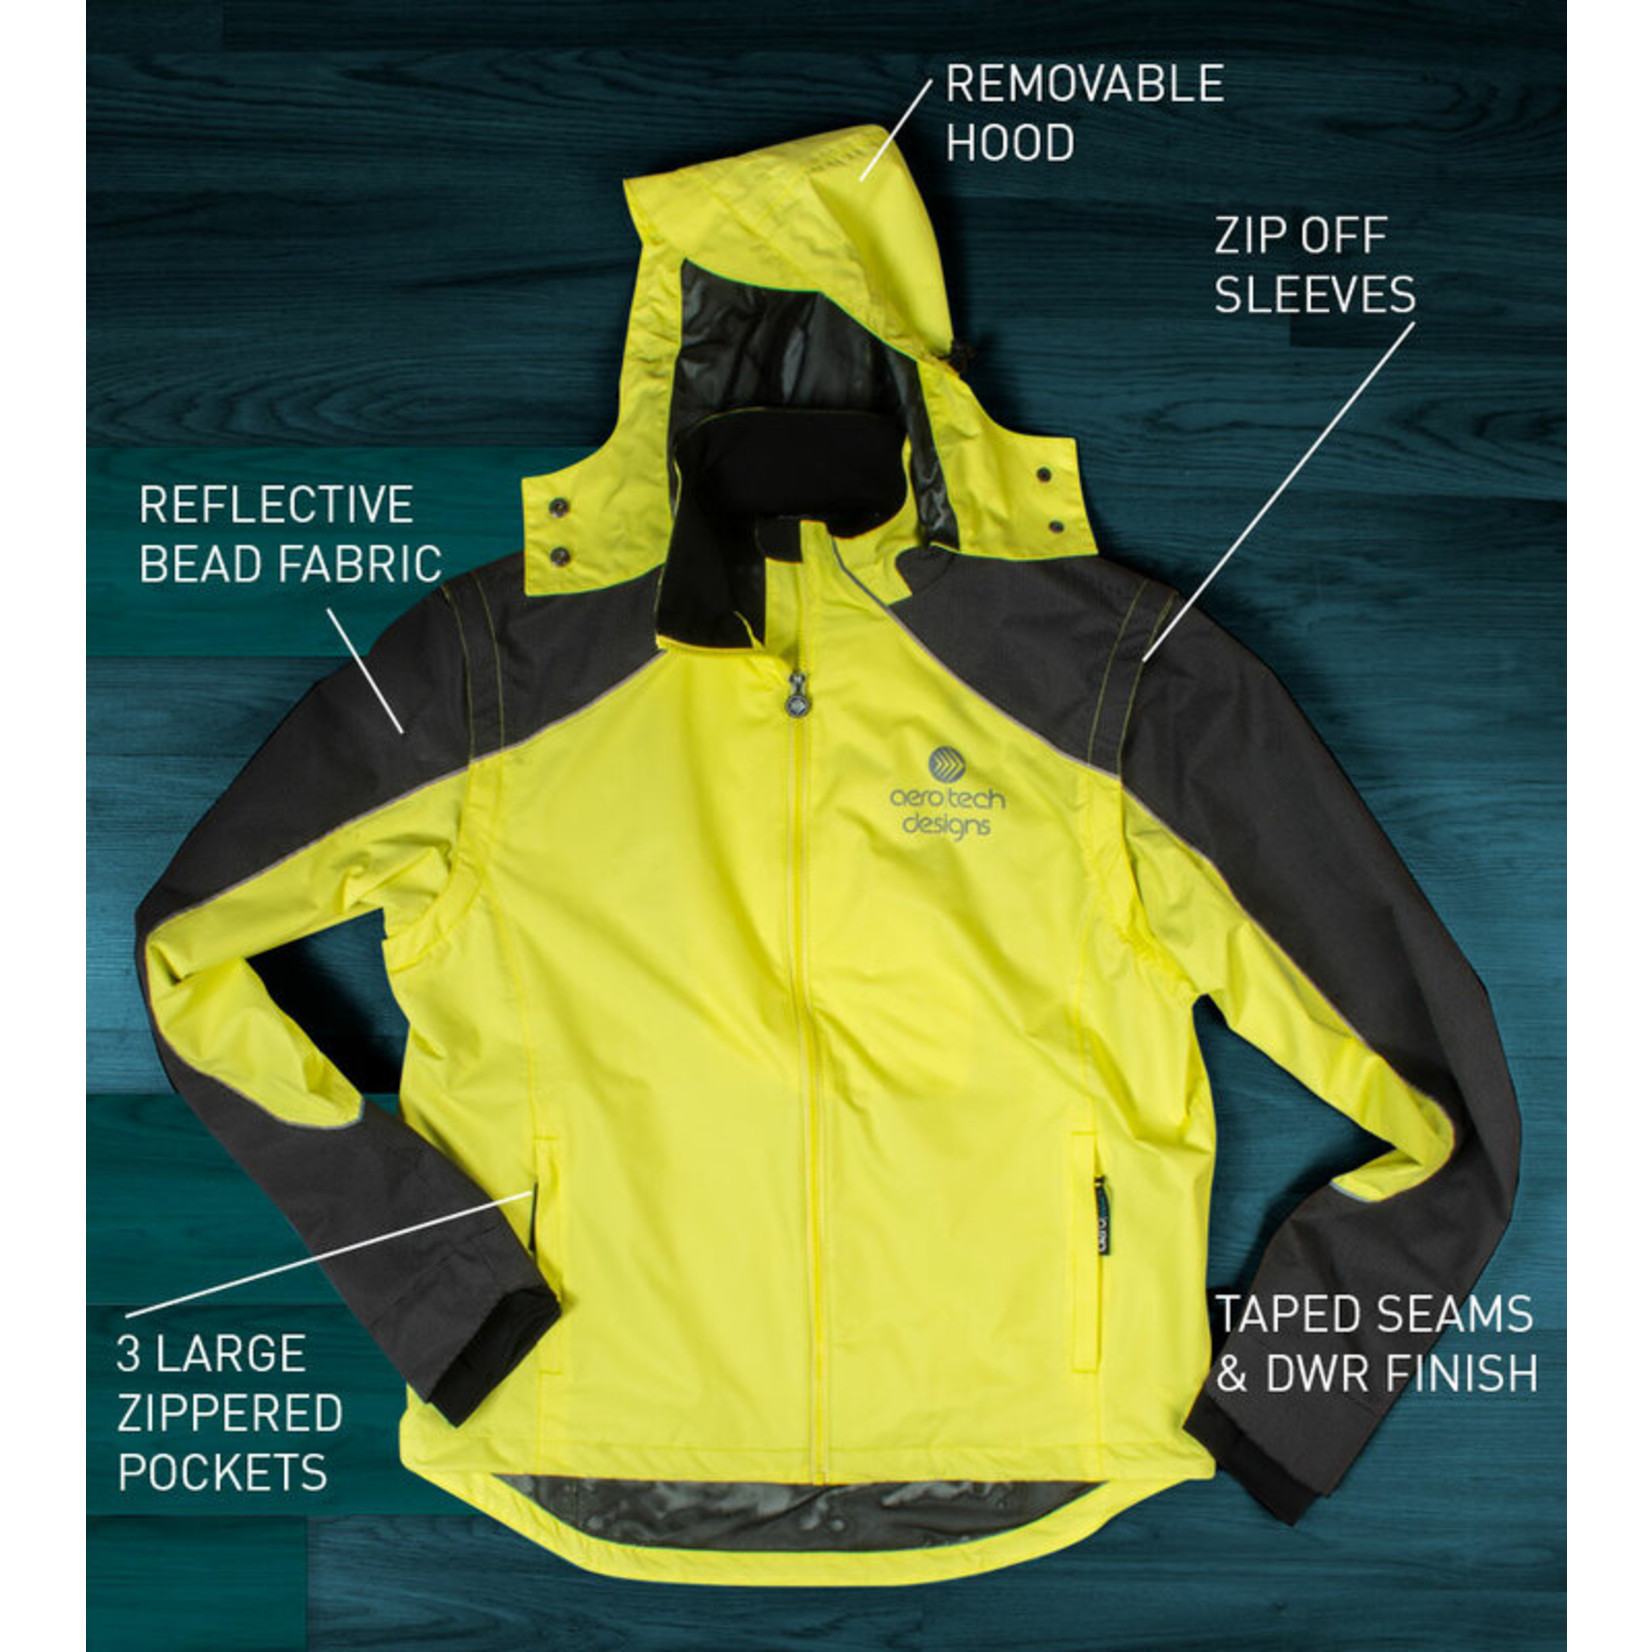 Aero Tech Men's Aero Reflective Cycling Rain Coat - Waterproof Jacket with Zip-Off Sleeves